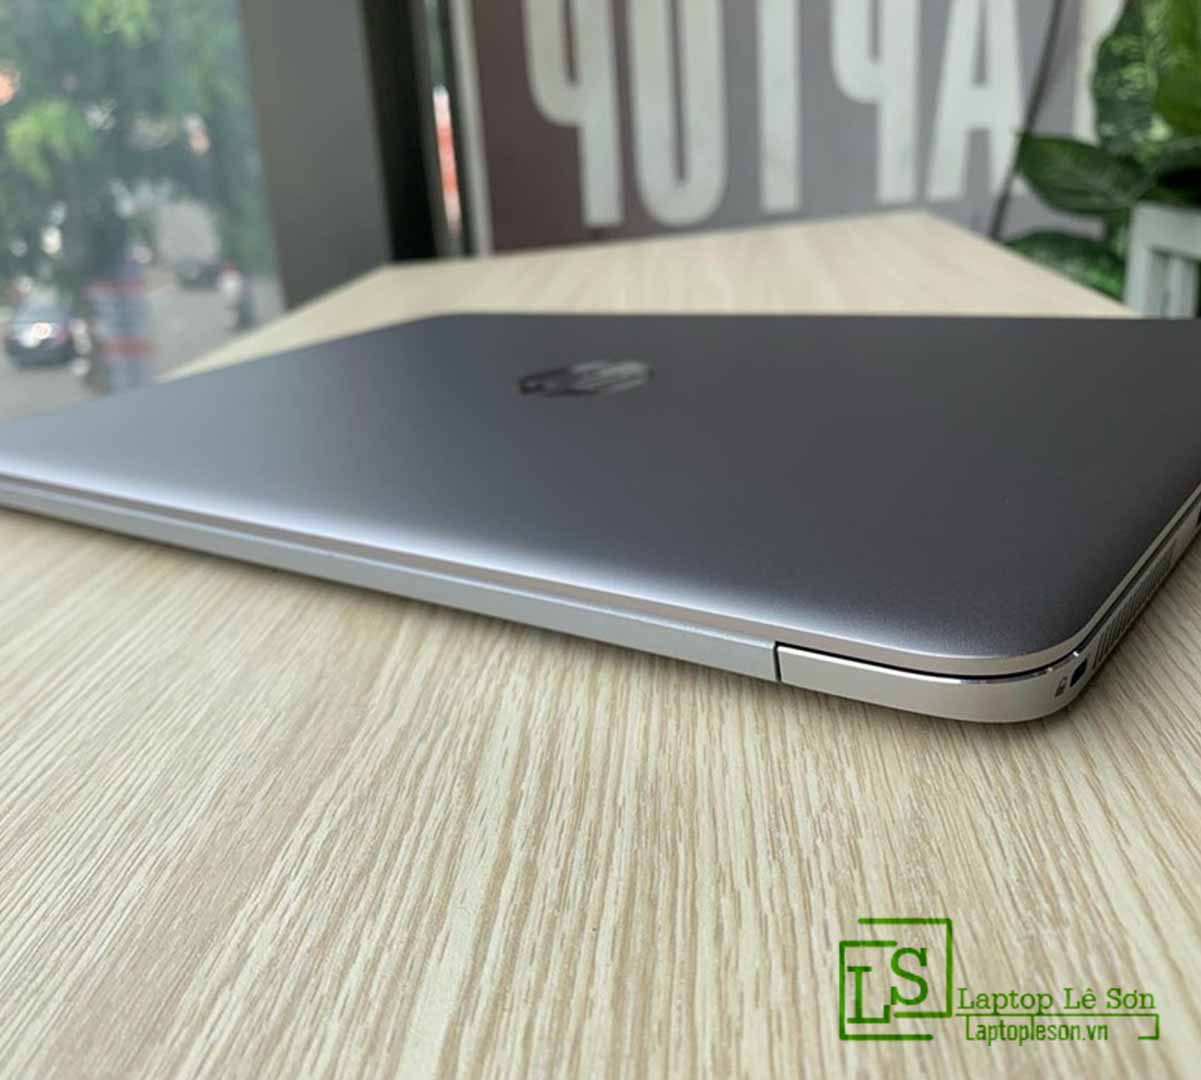 4. HP EliteBook Folio 1040 G3 - Laptop core i5 tầm giá 10 triệu hãng HP